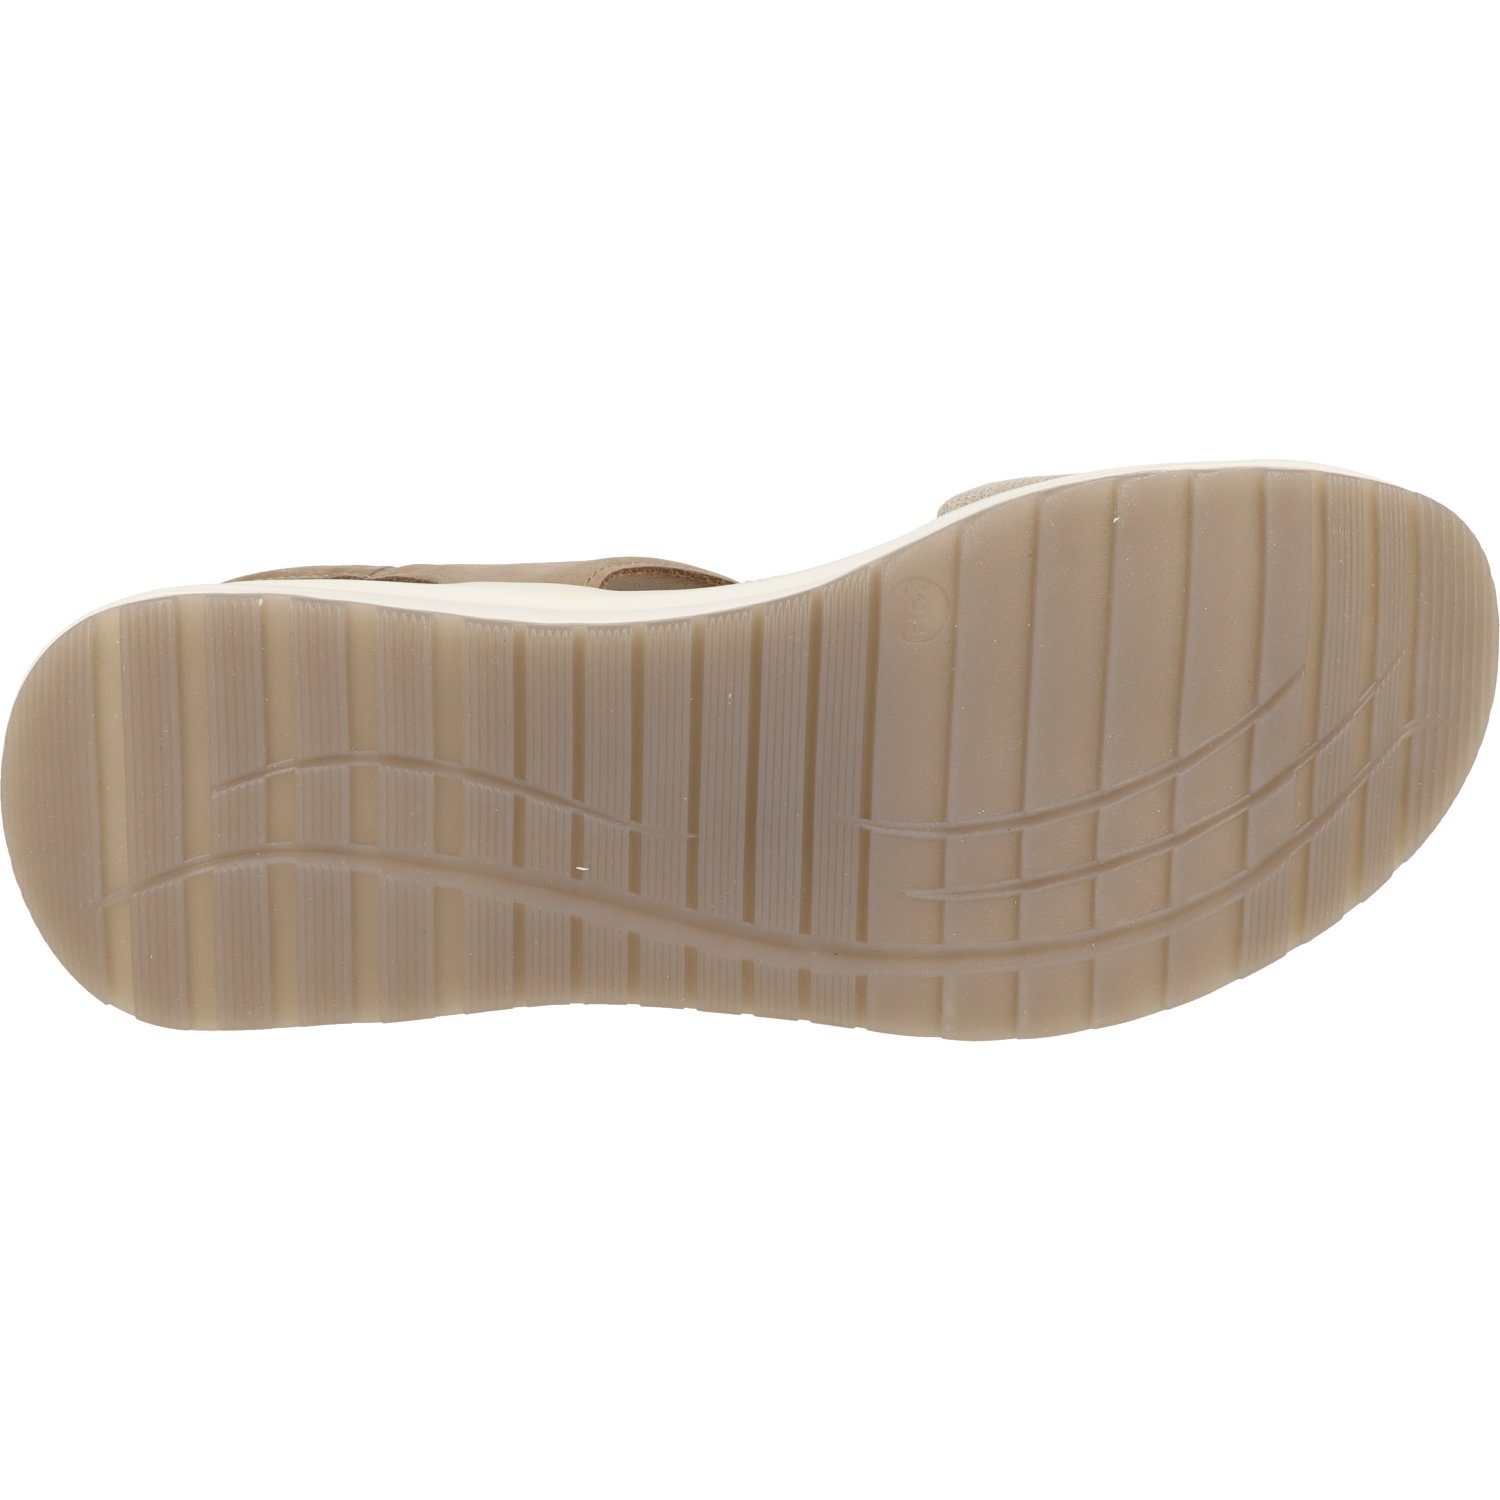 Caprice Damen Schuhe H-Weite Leder Comb Climotion Sandalette 9-28718-20 Klett Mud Sandalette